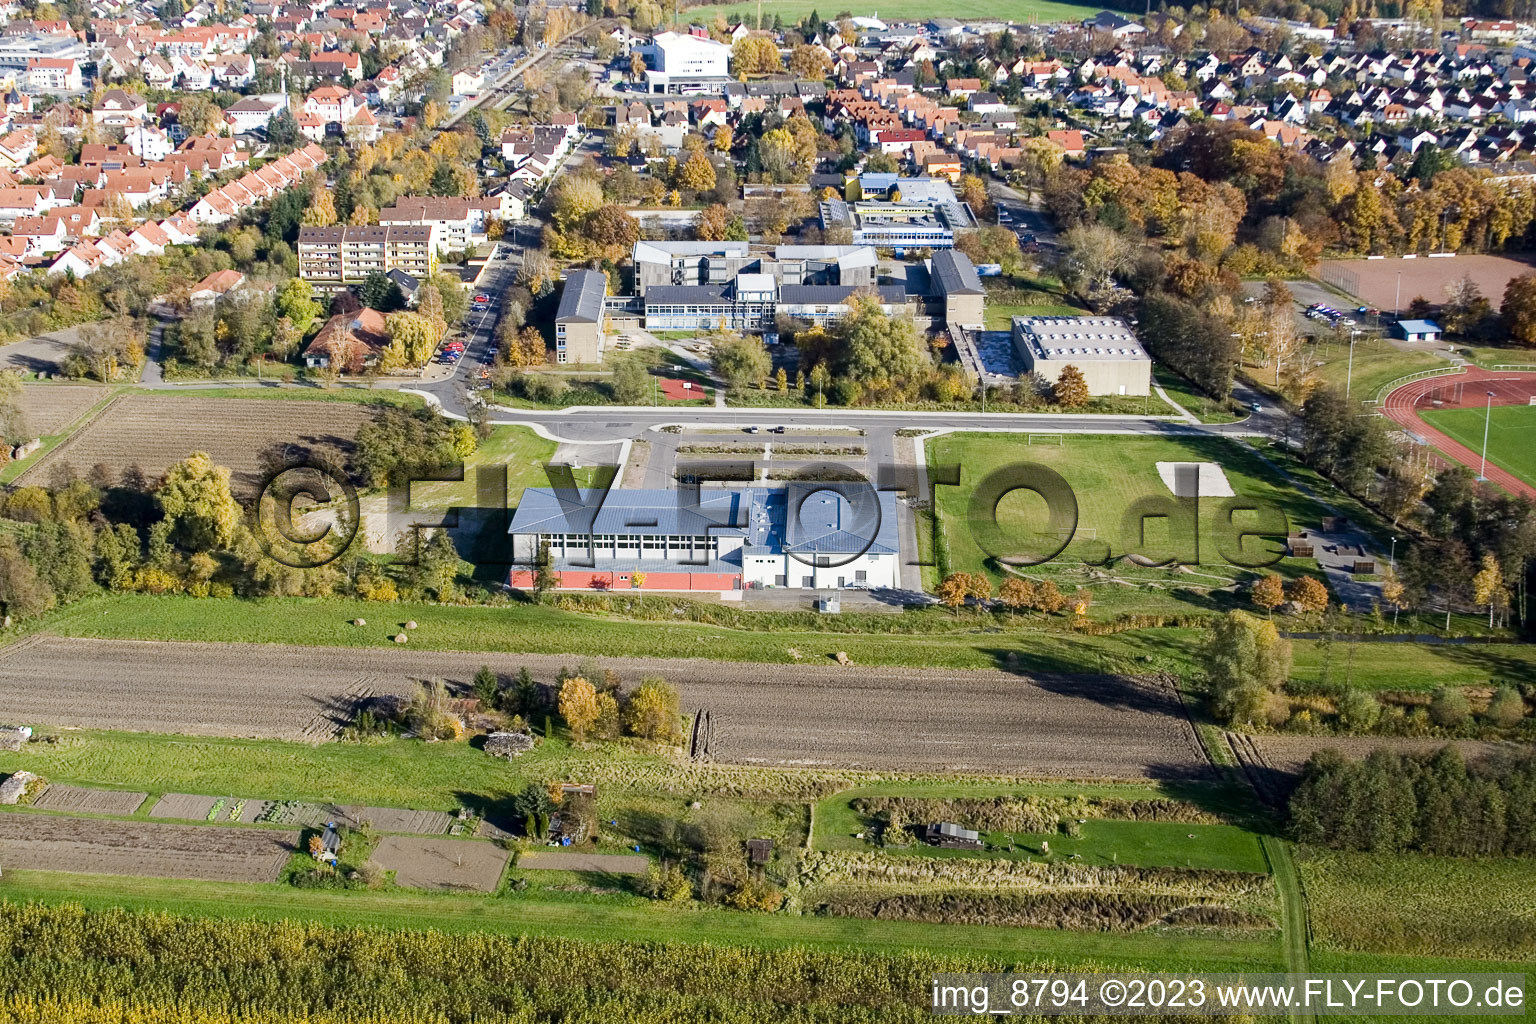 Bird's eye view of Bienwaldhalle in Kandel in the state Rhineland-Palatinate, Germany